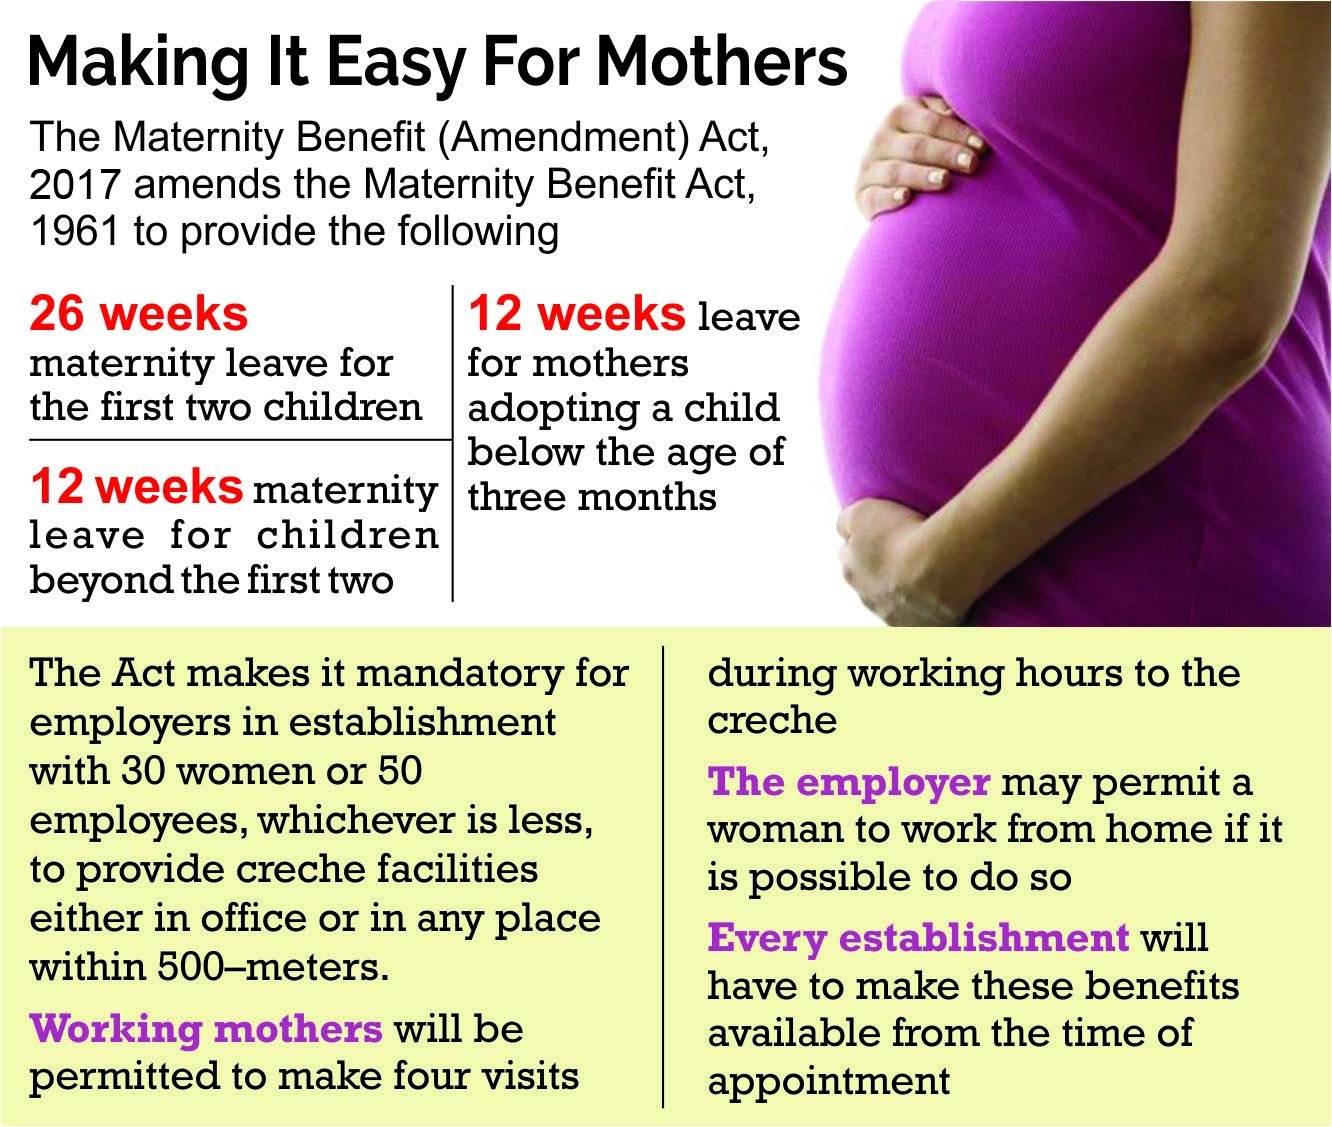 The Maternity Benefit (Amendment) Act